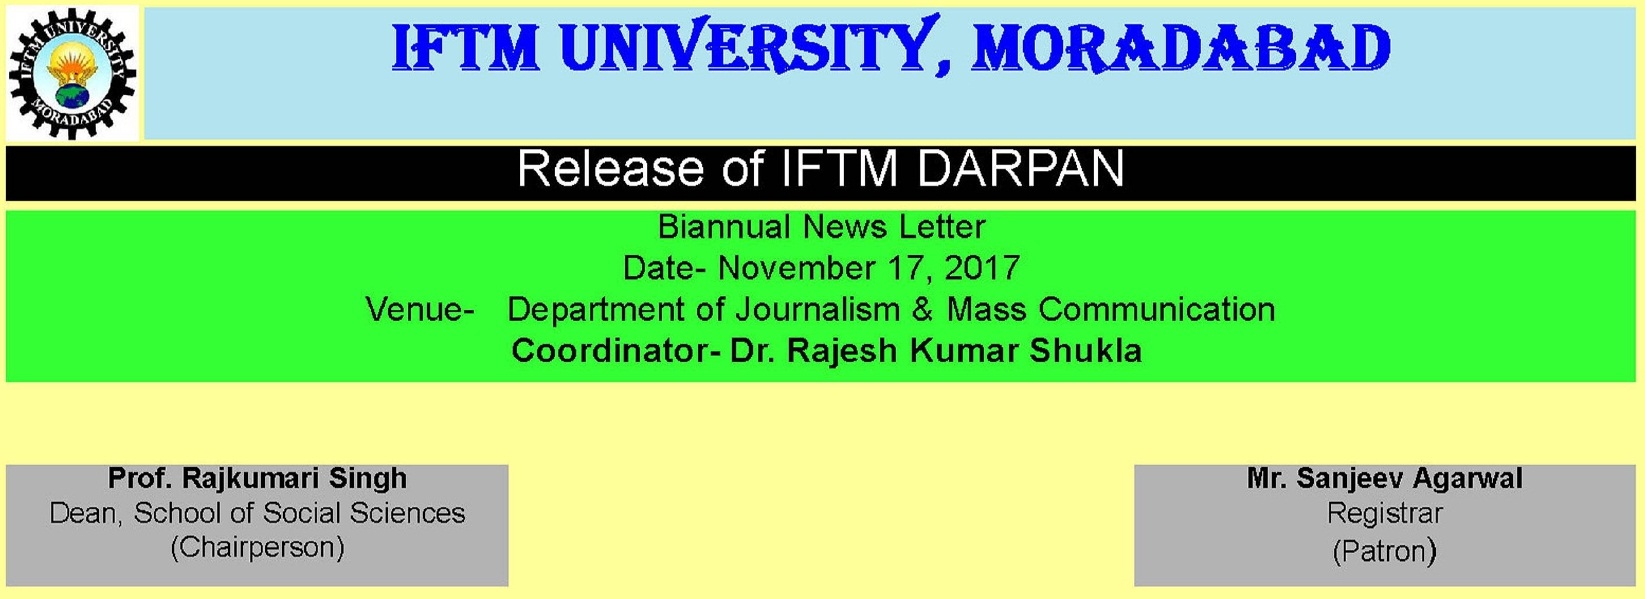 Release of IFTM DARPAN 